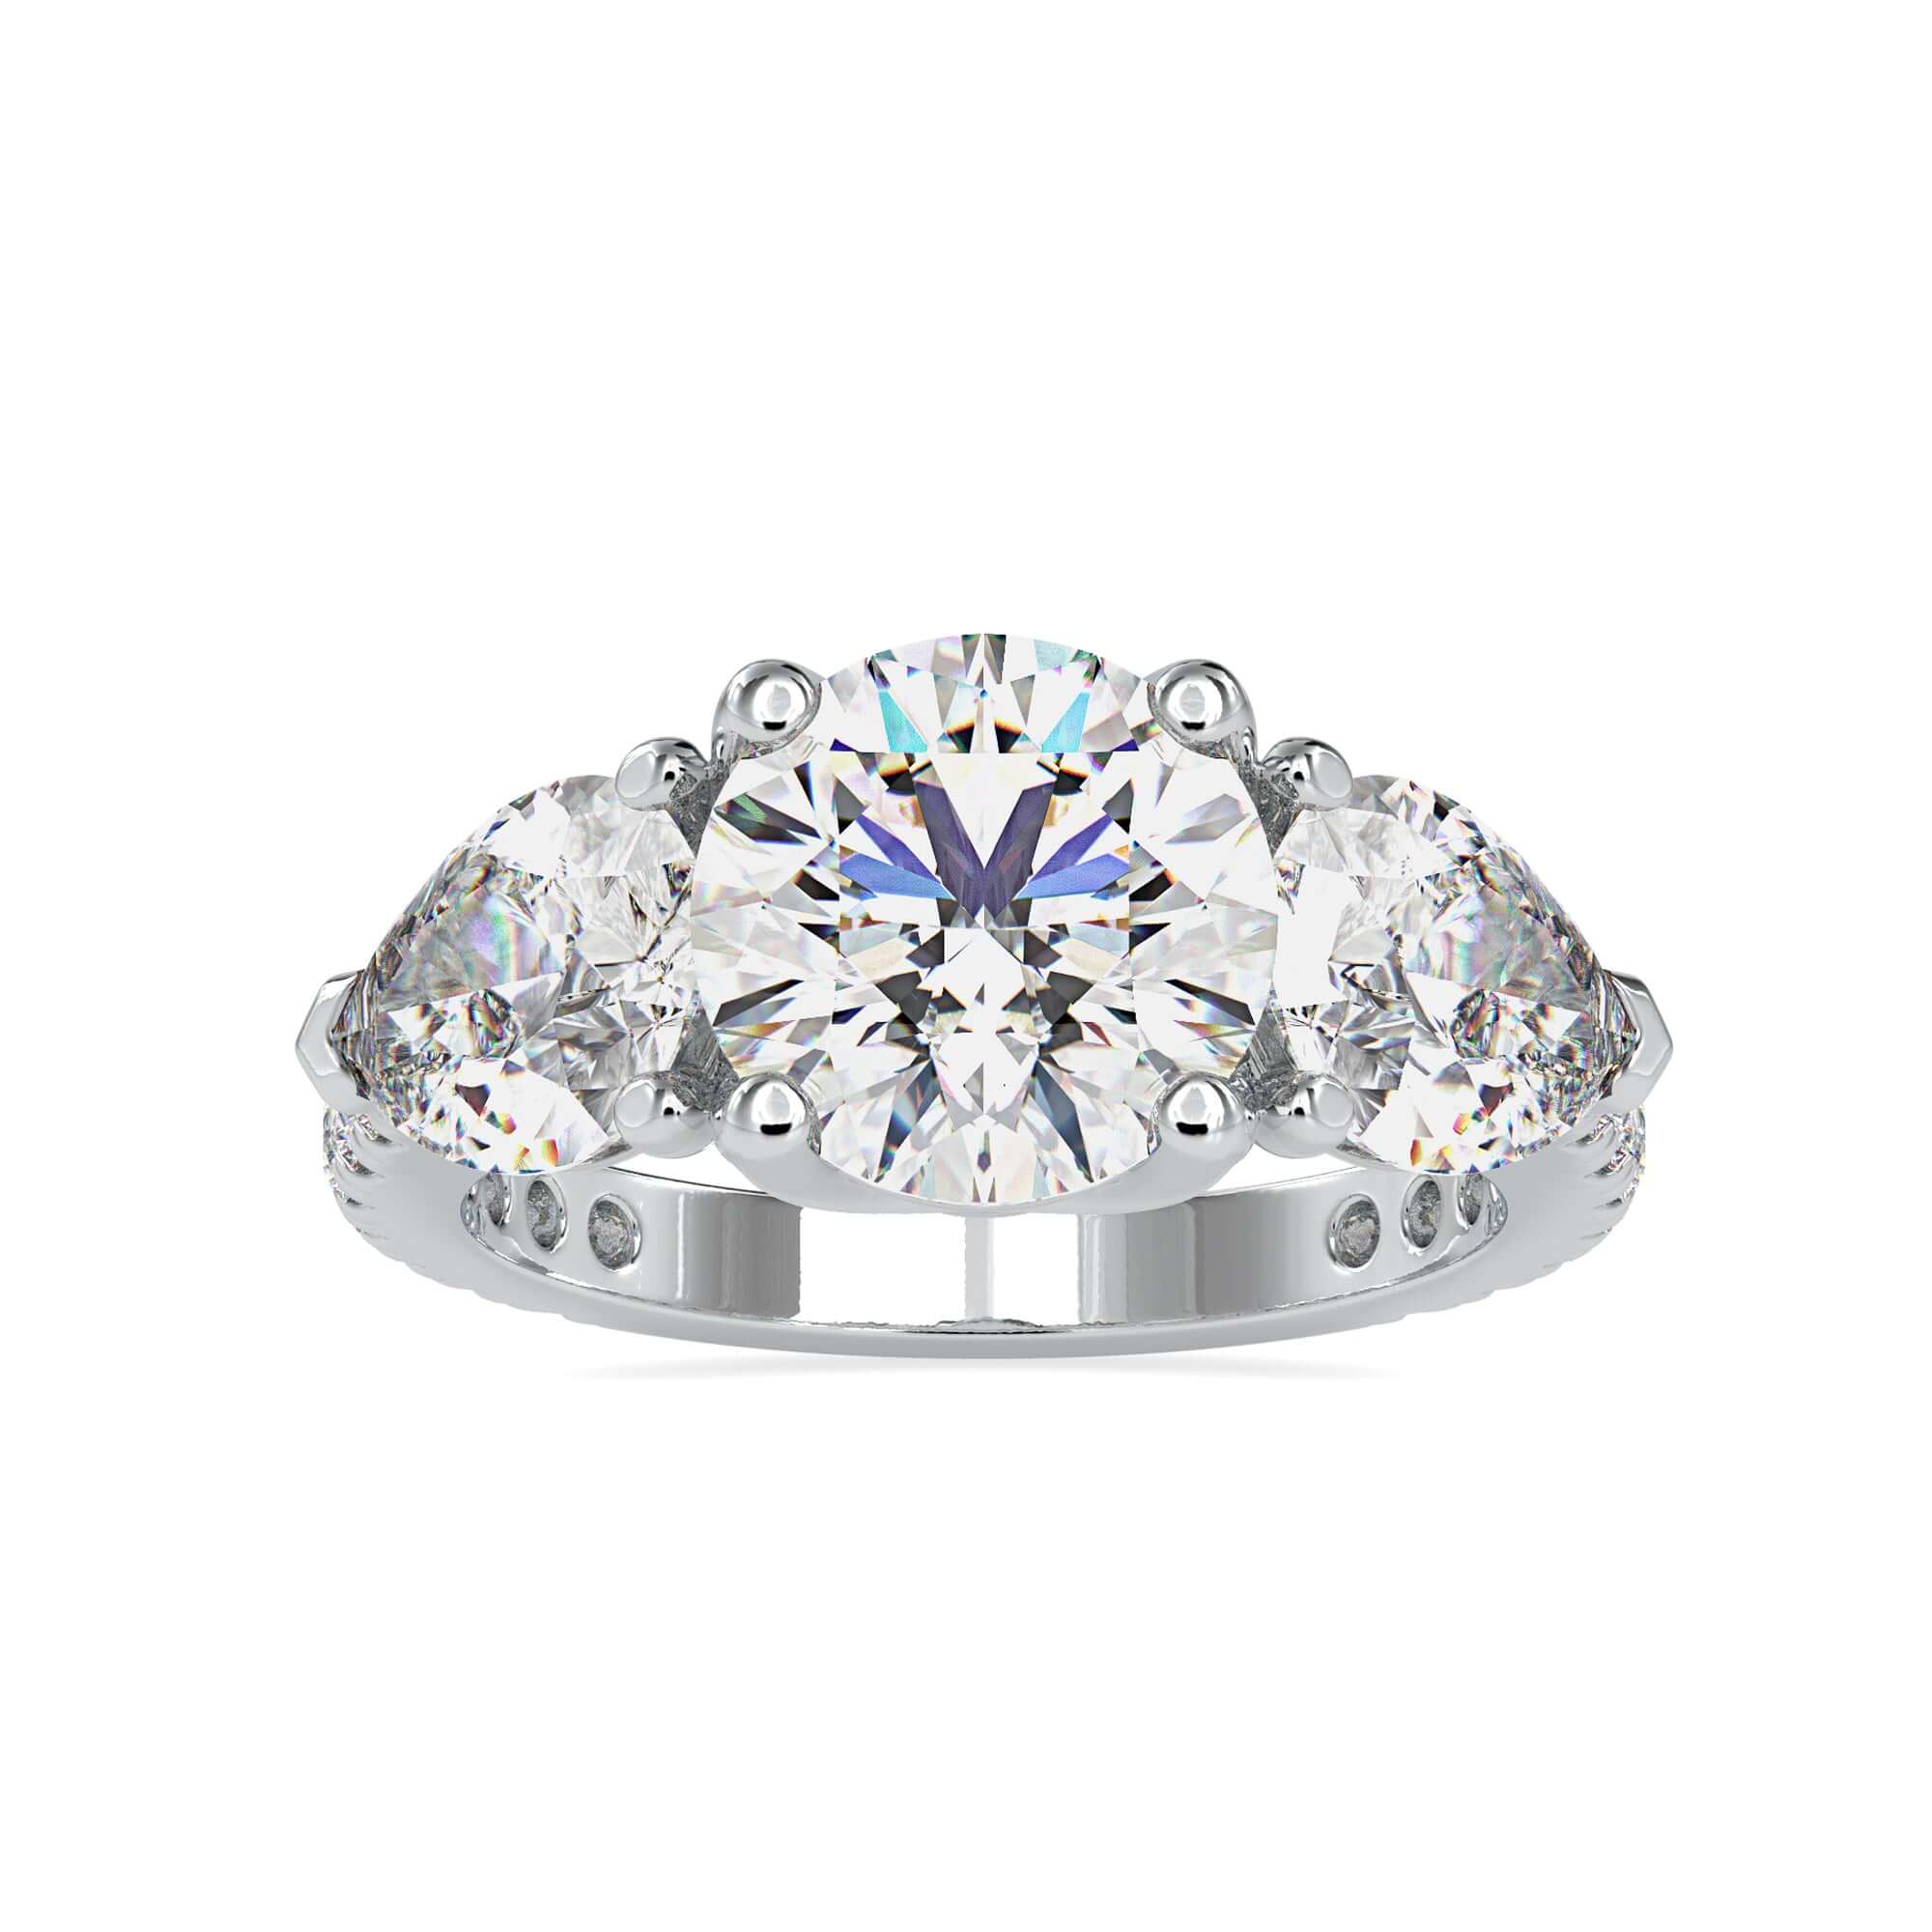 affordable engagement ring - diamondrensu